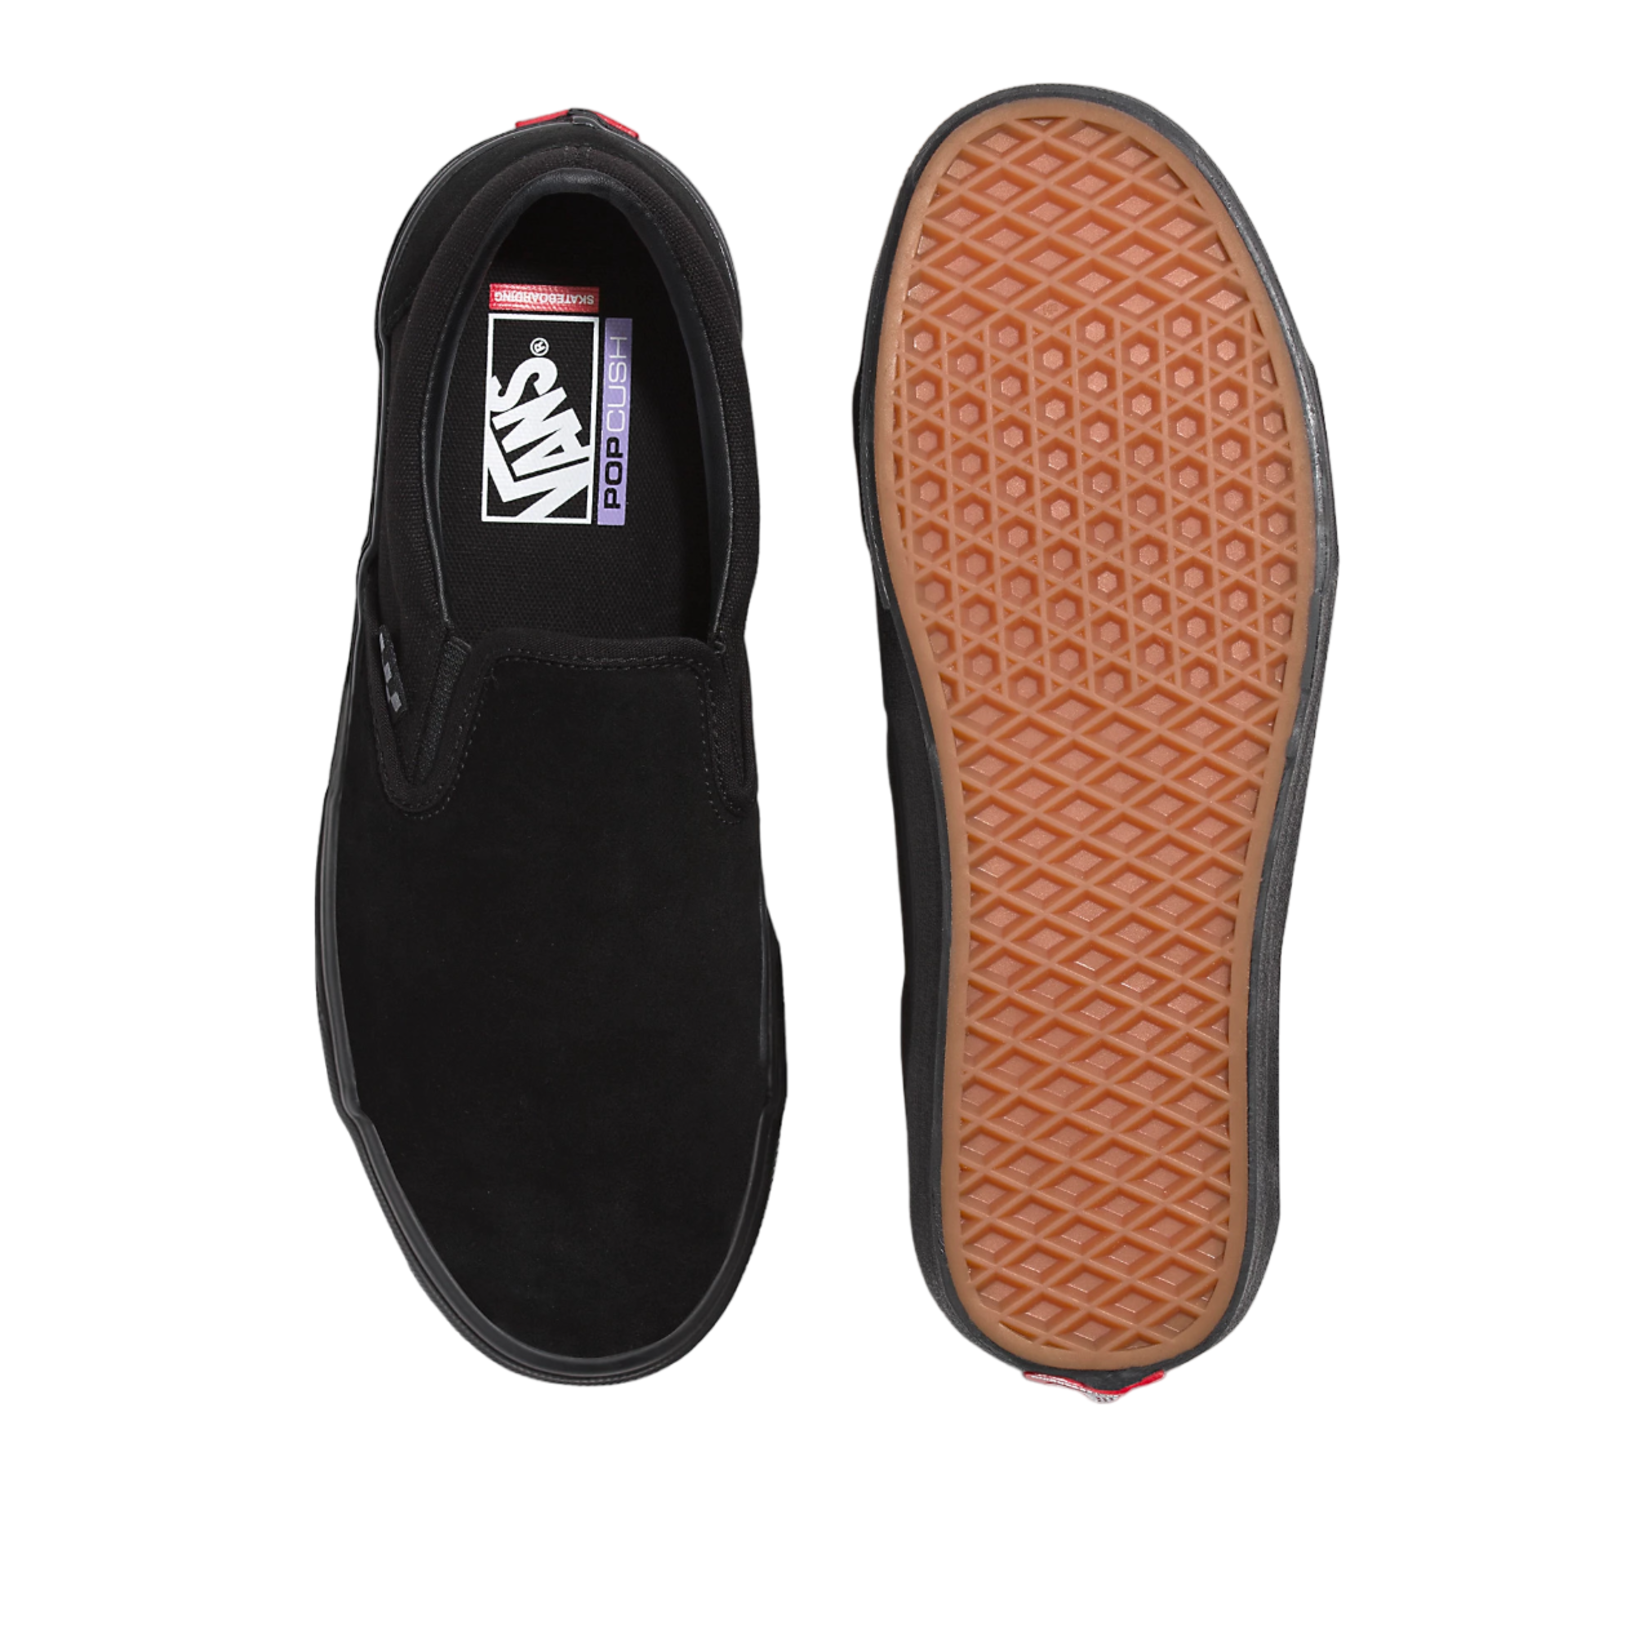 Vans Slip On Pro Skate Shoes - Black/Black - - Attic Skate & Snow Shop